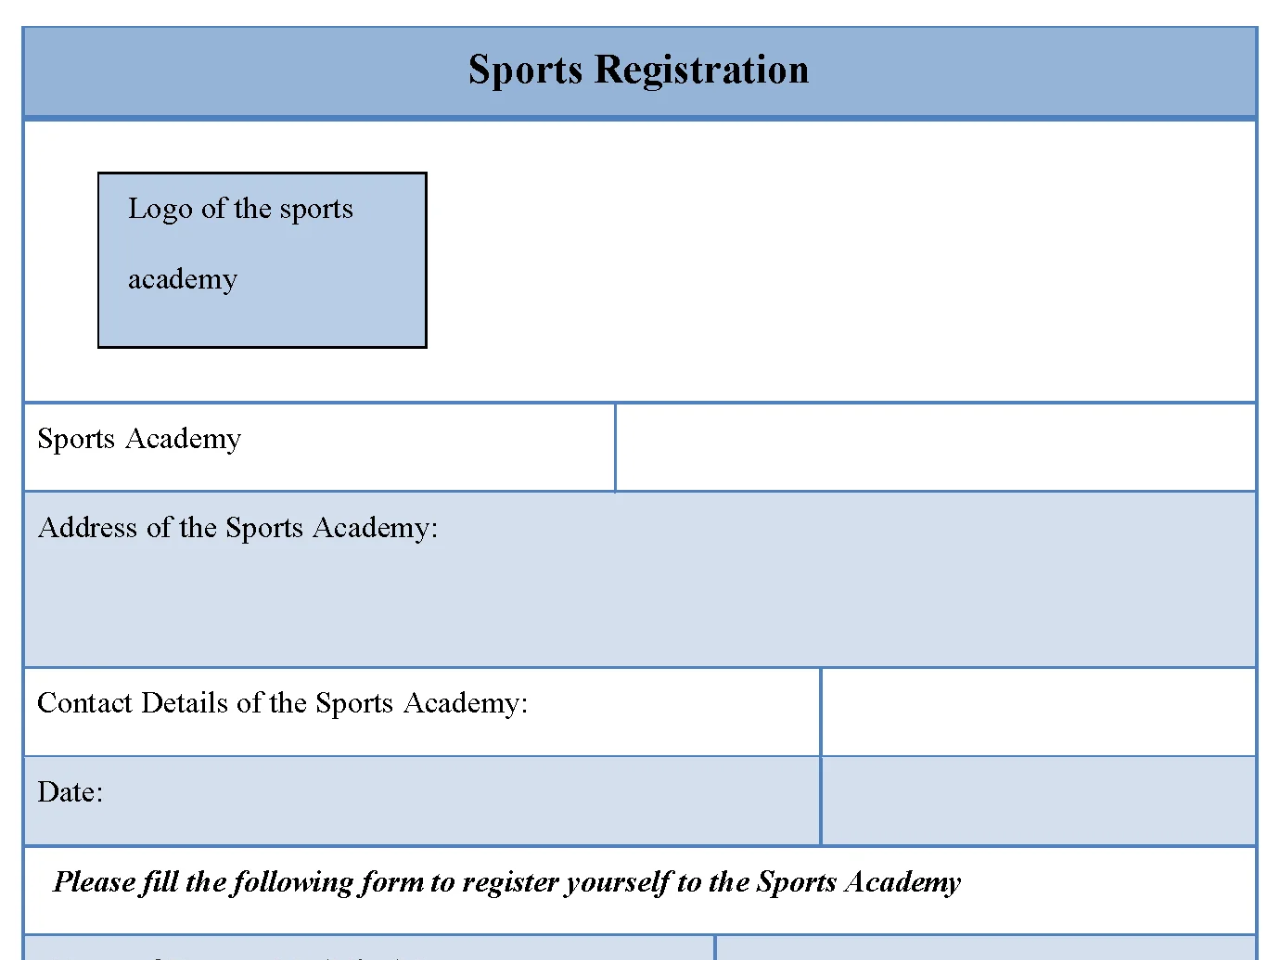 Sports Registration Form